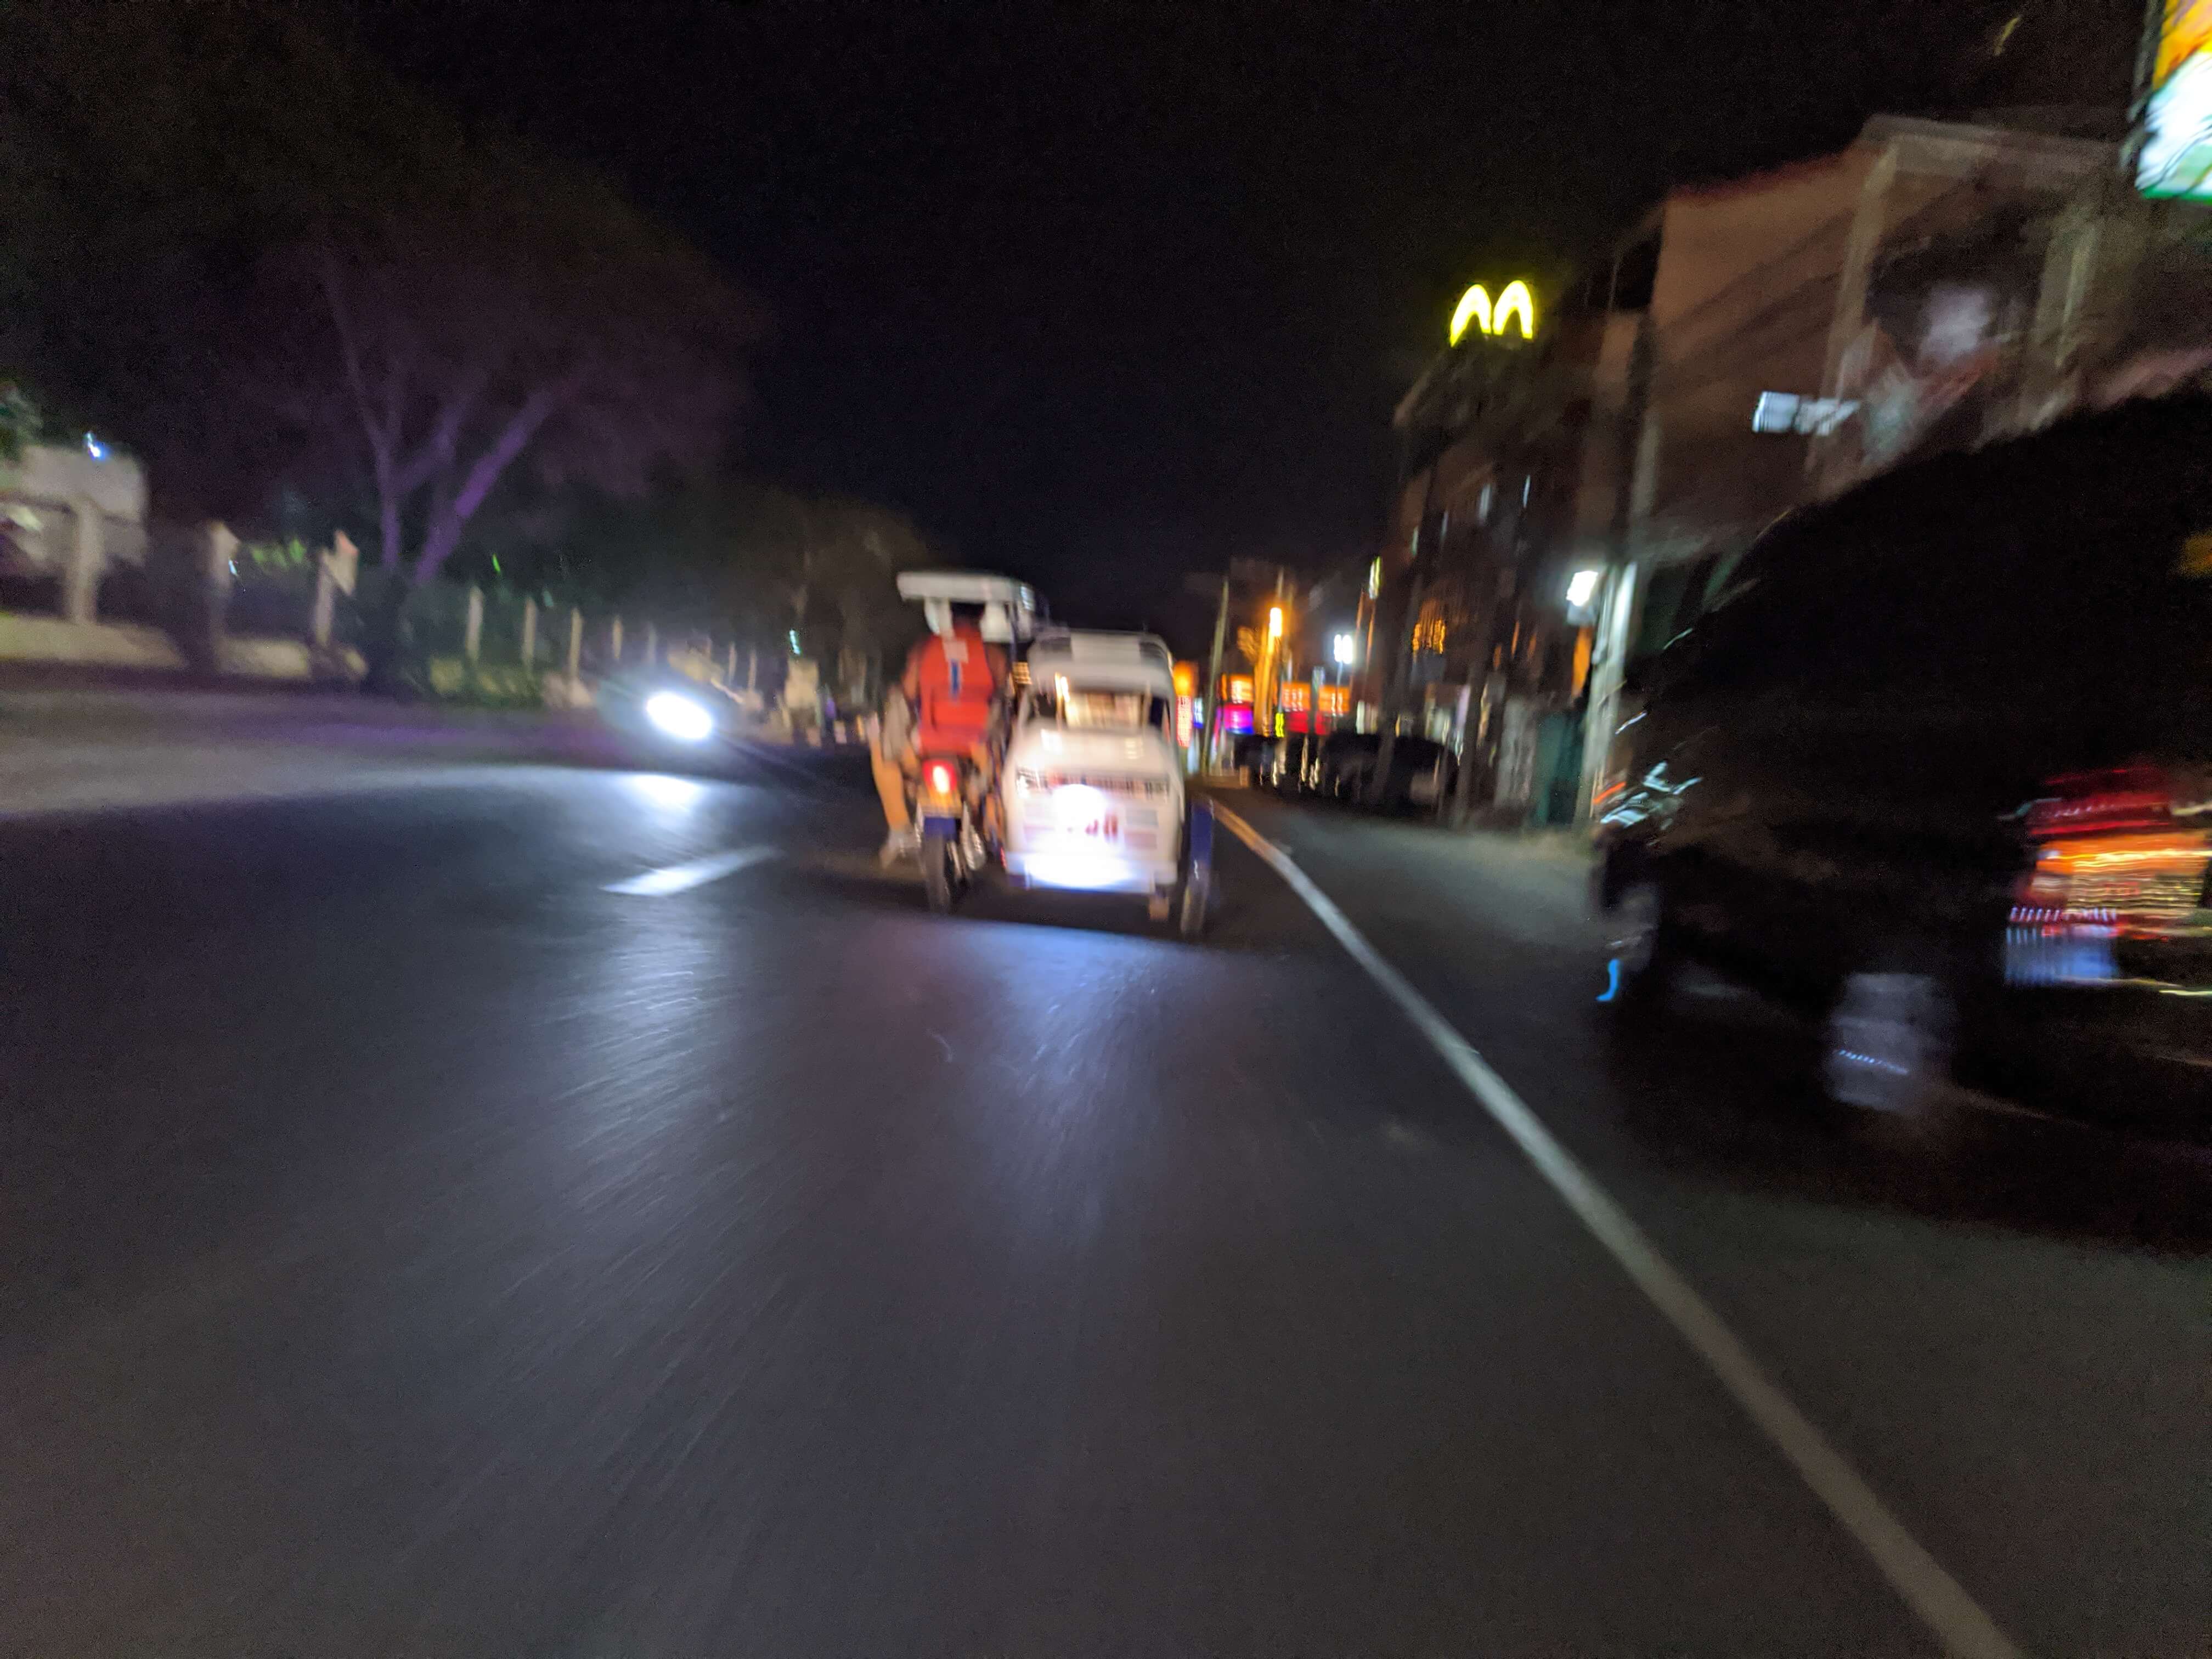 Tricycle at night / 走行中のトライシクル車内から撮影